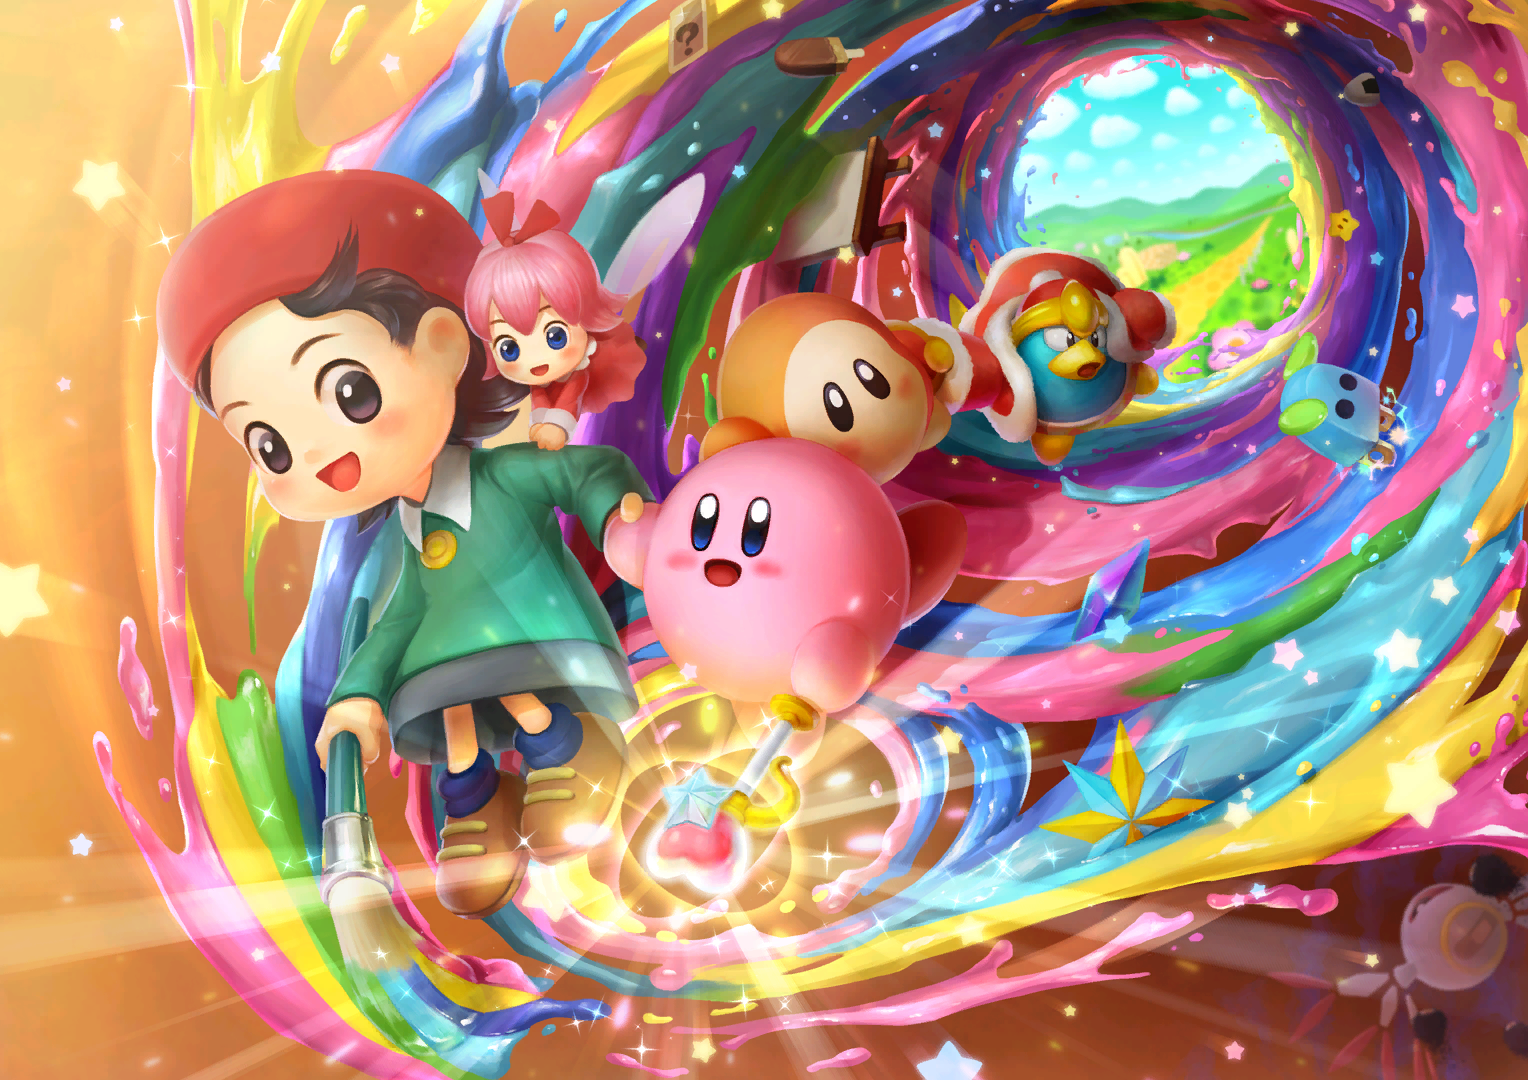 Kirby Star Allies. wikipedia:Fair use. 